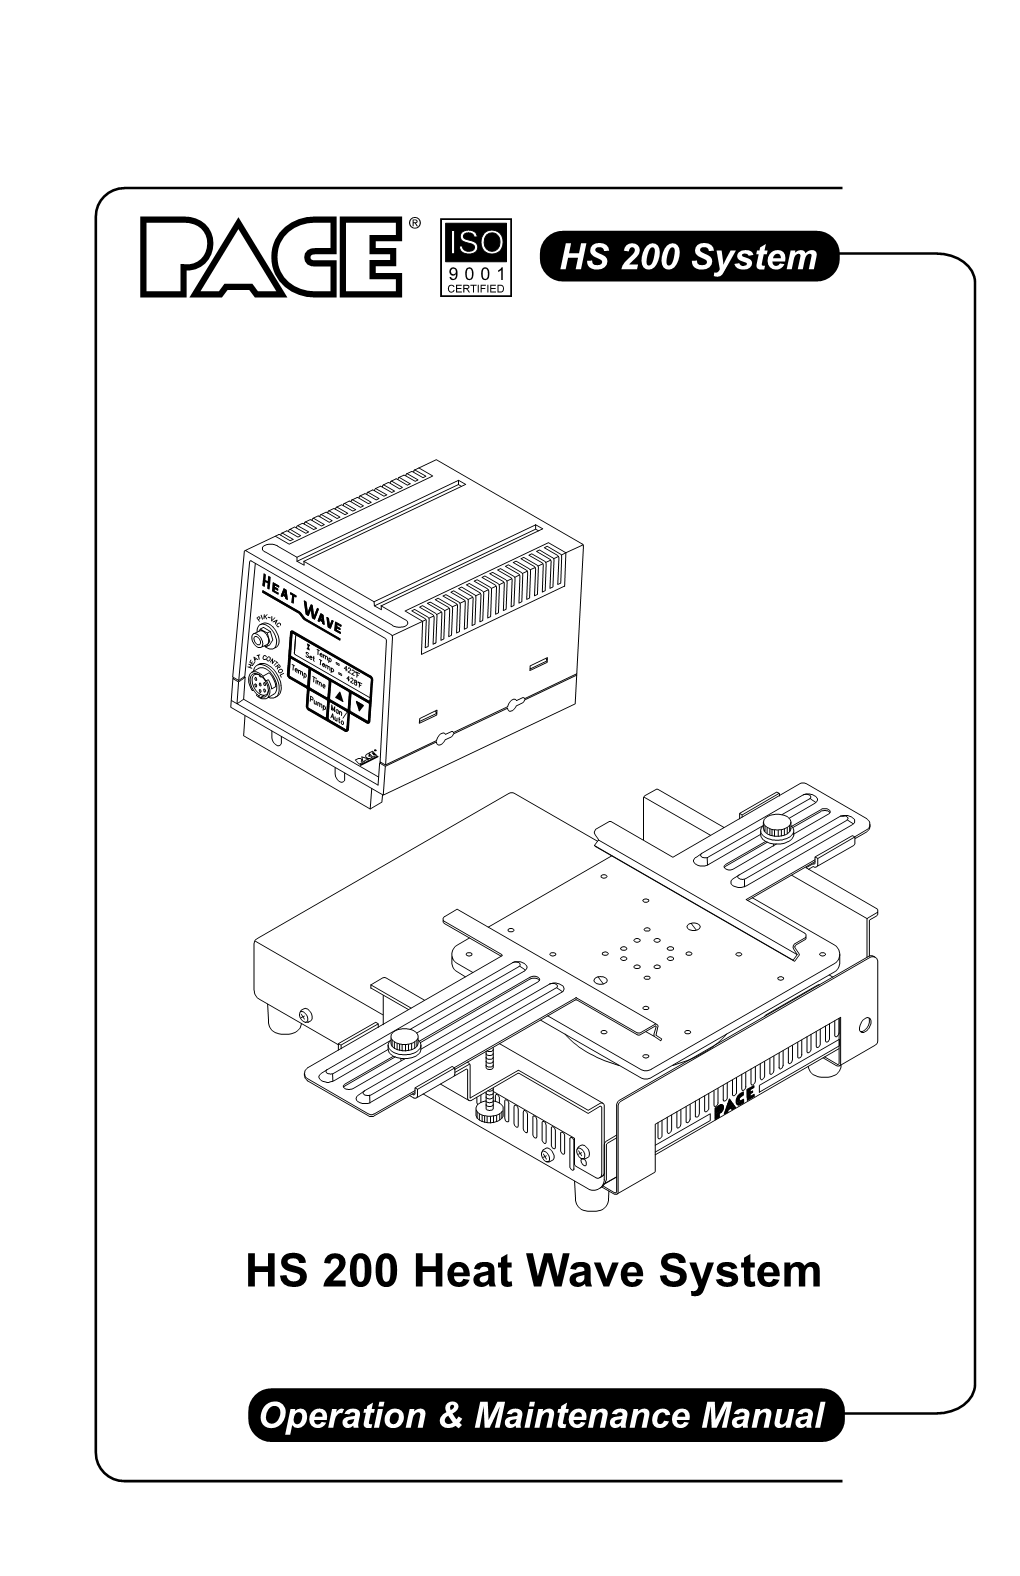 HS 200 Heat Wave System